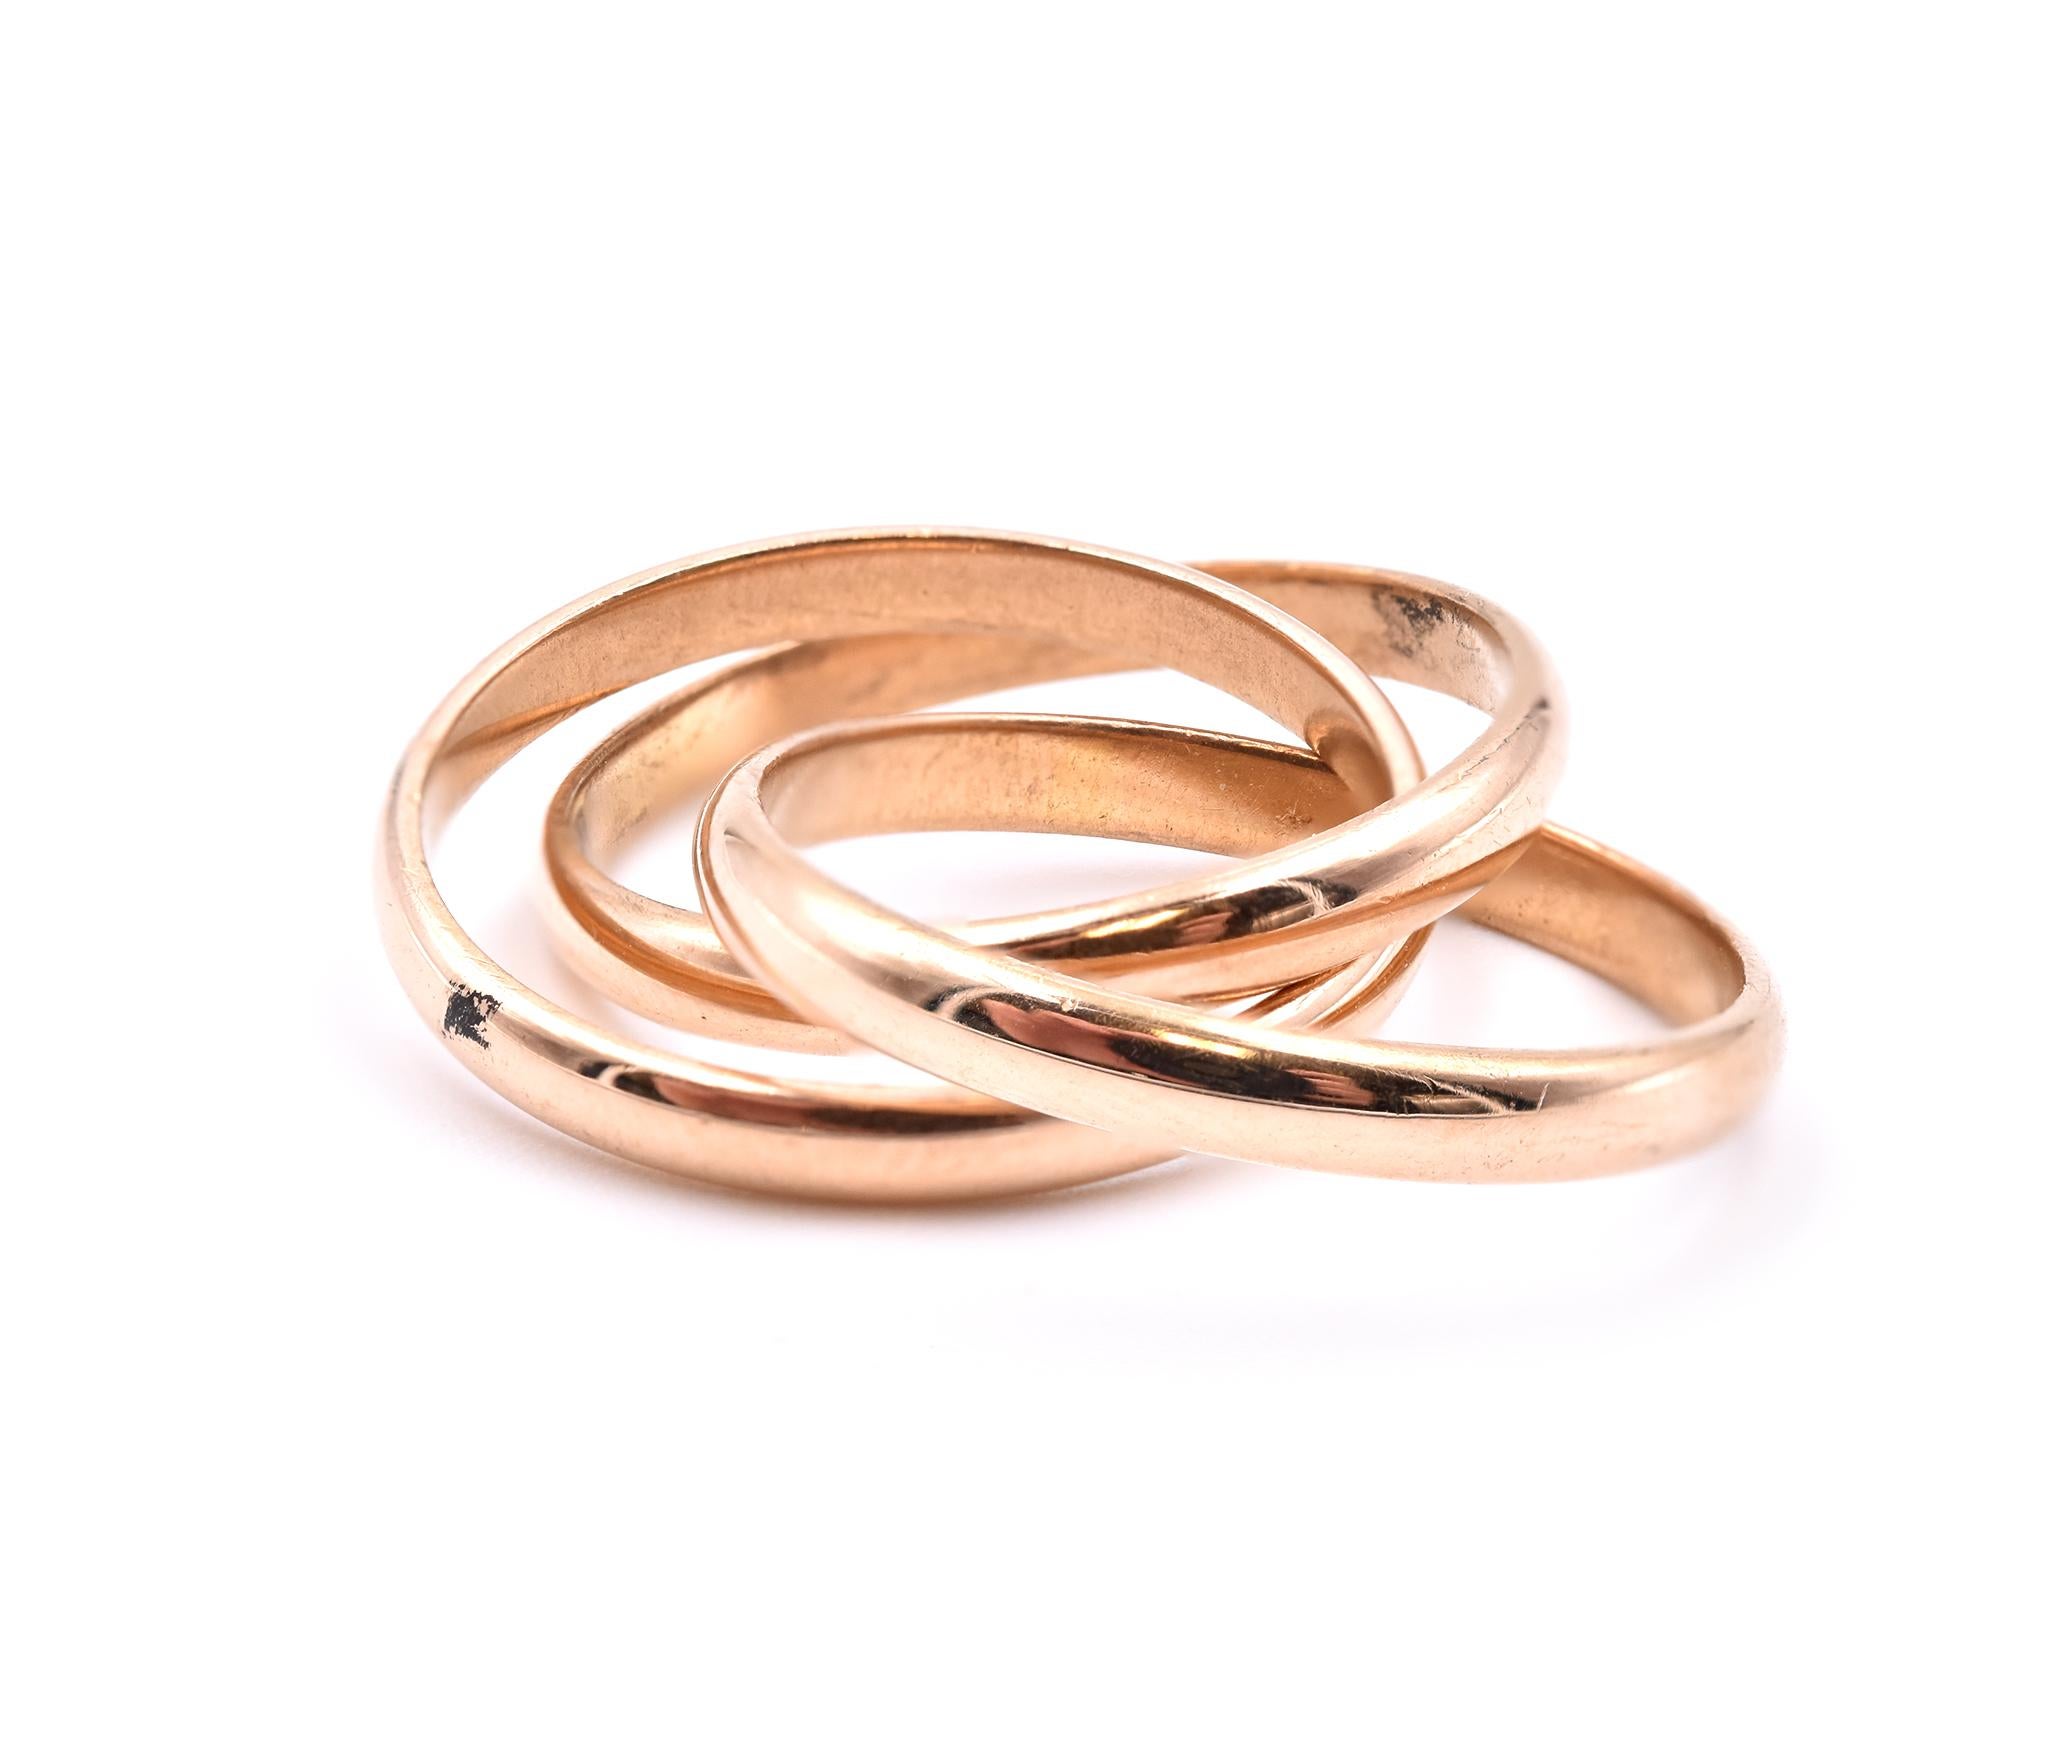 Designer: custom 
Material: 18K yellow gold 
Dimensions: rings measures 2.25mm wide
Size: 4
Weight:  4.94 grams